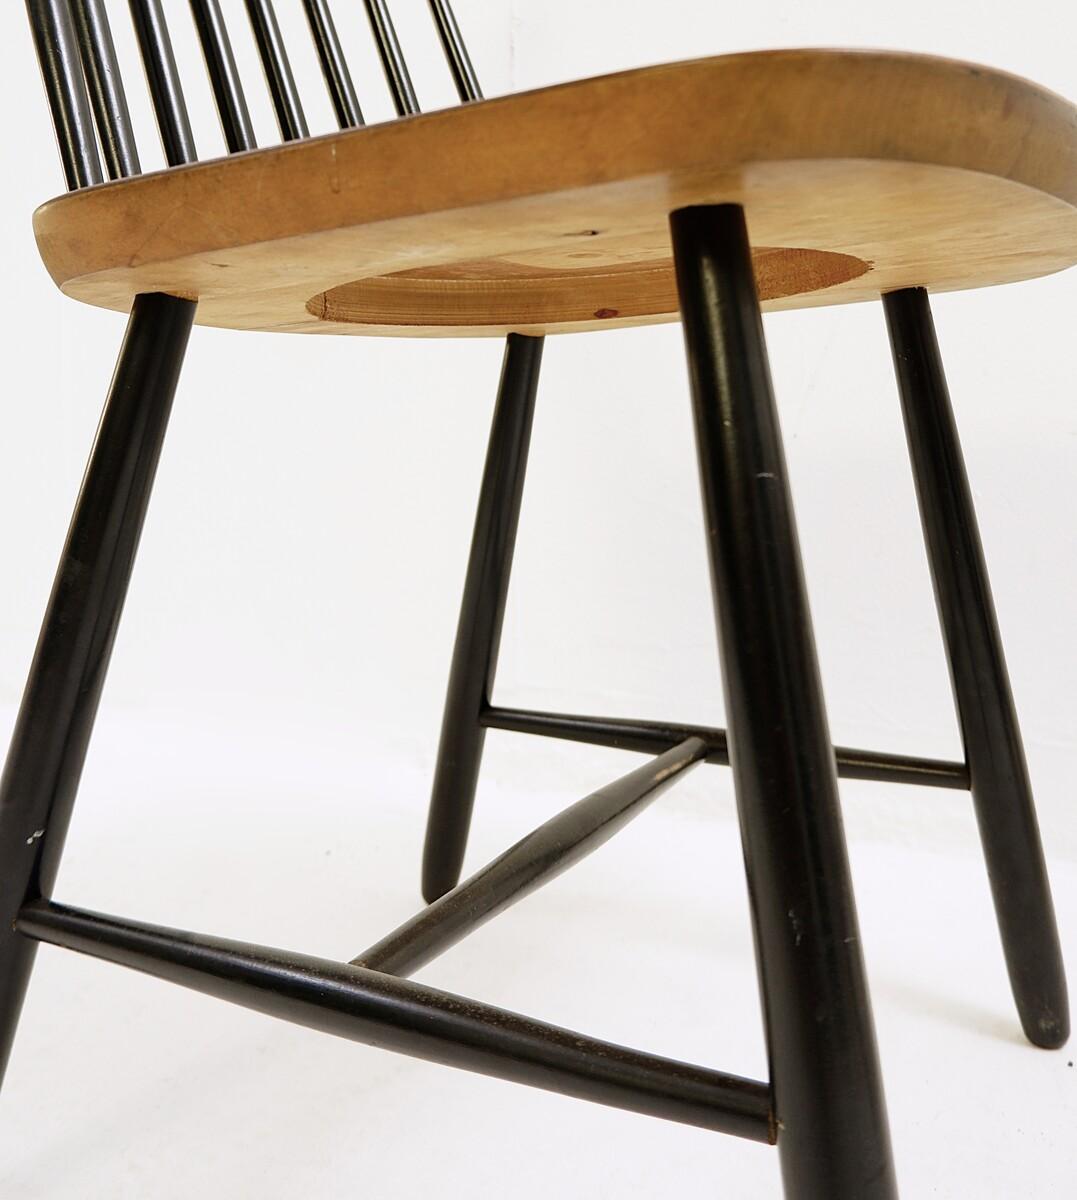 Dutch Midcentury Spindle Back Dining Chairs by Yngve Ekström for Pastoe, Netherlands For Sale